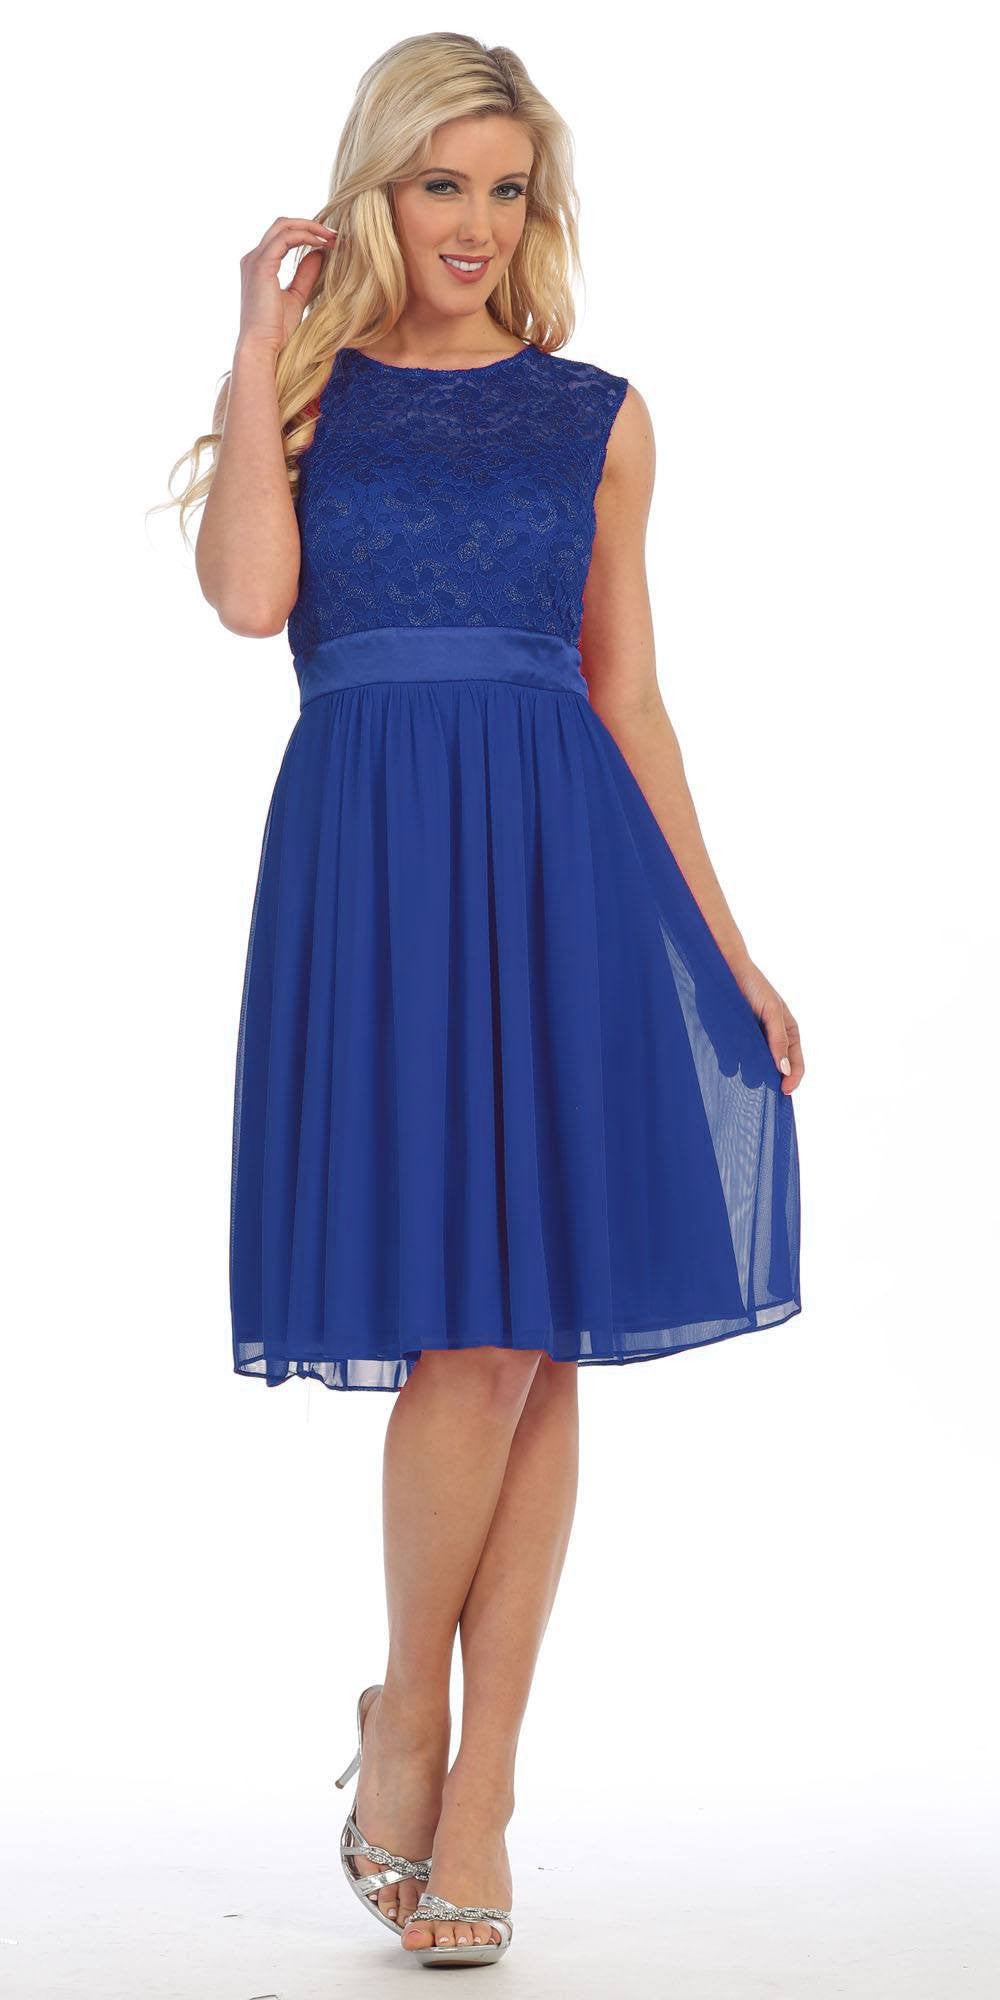 Knee Length Sleeveless Royal Blue Dress Lace Top Chiffon Skirt